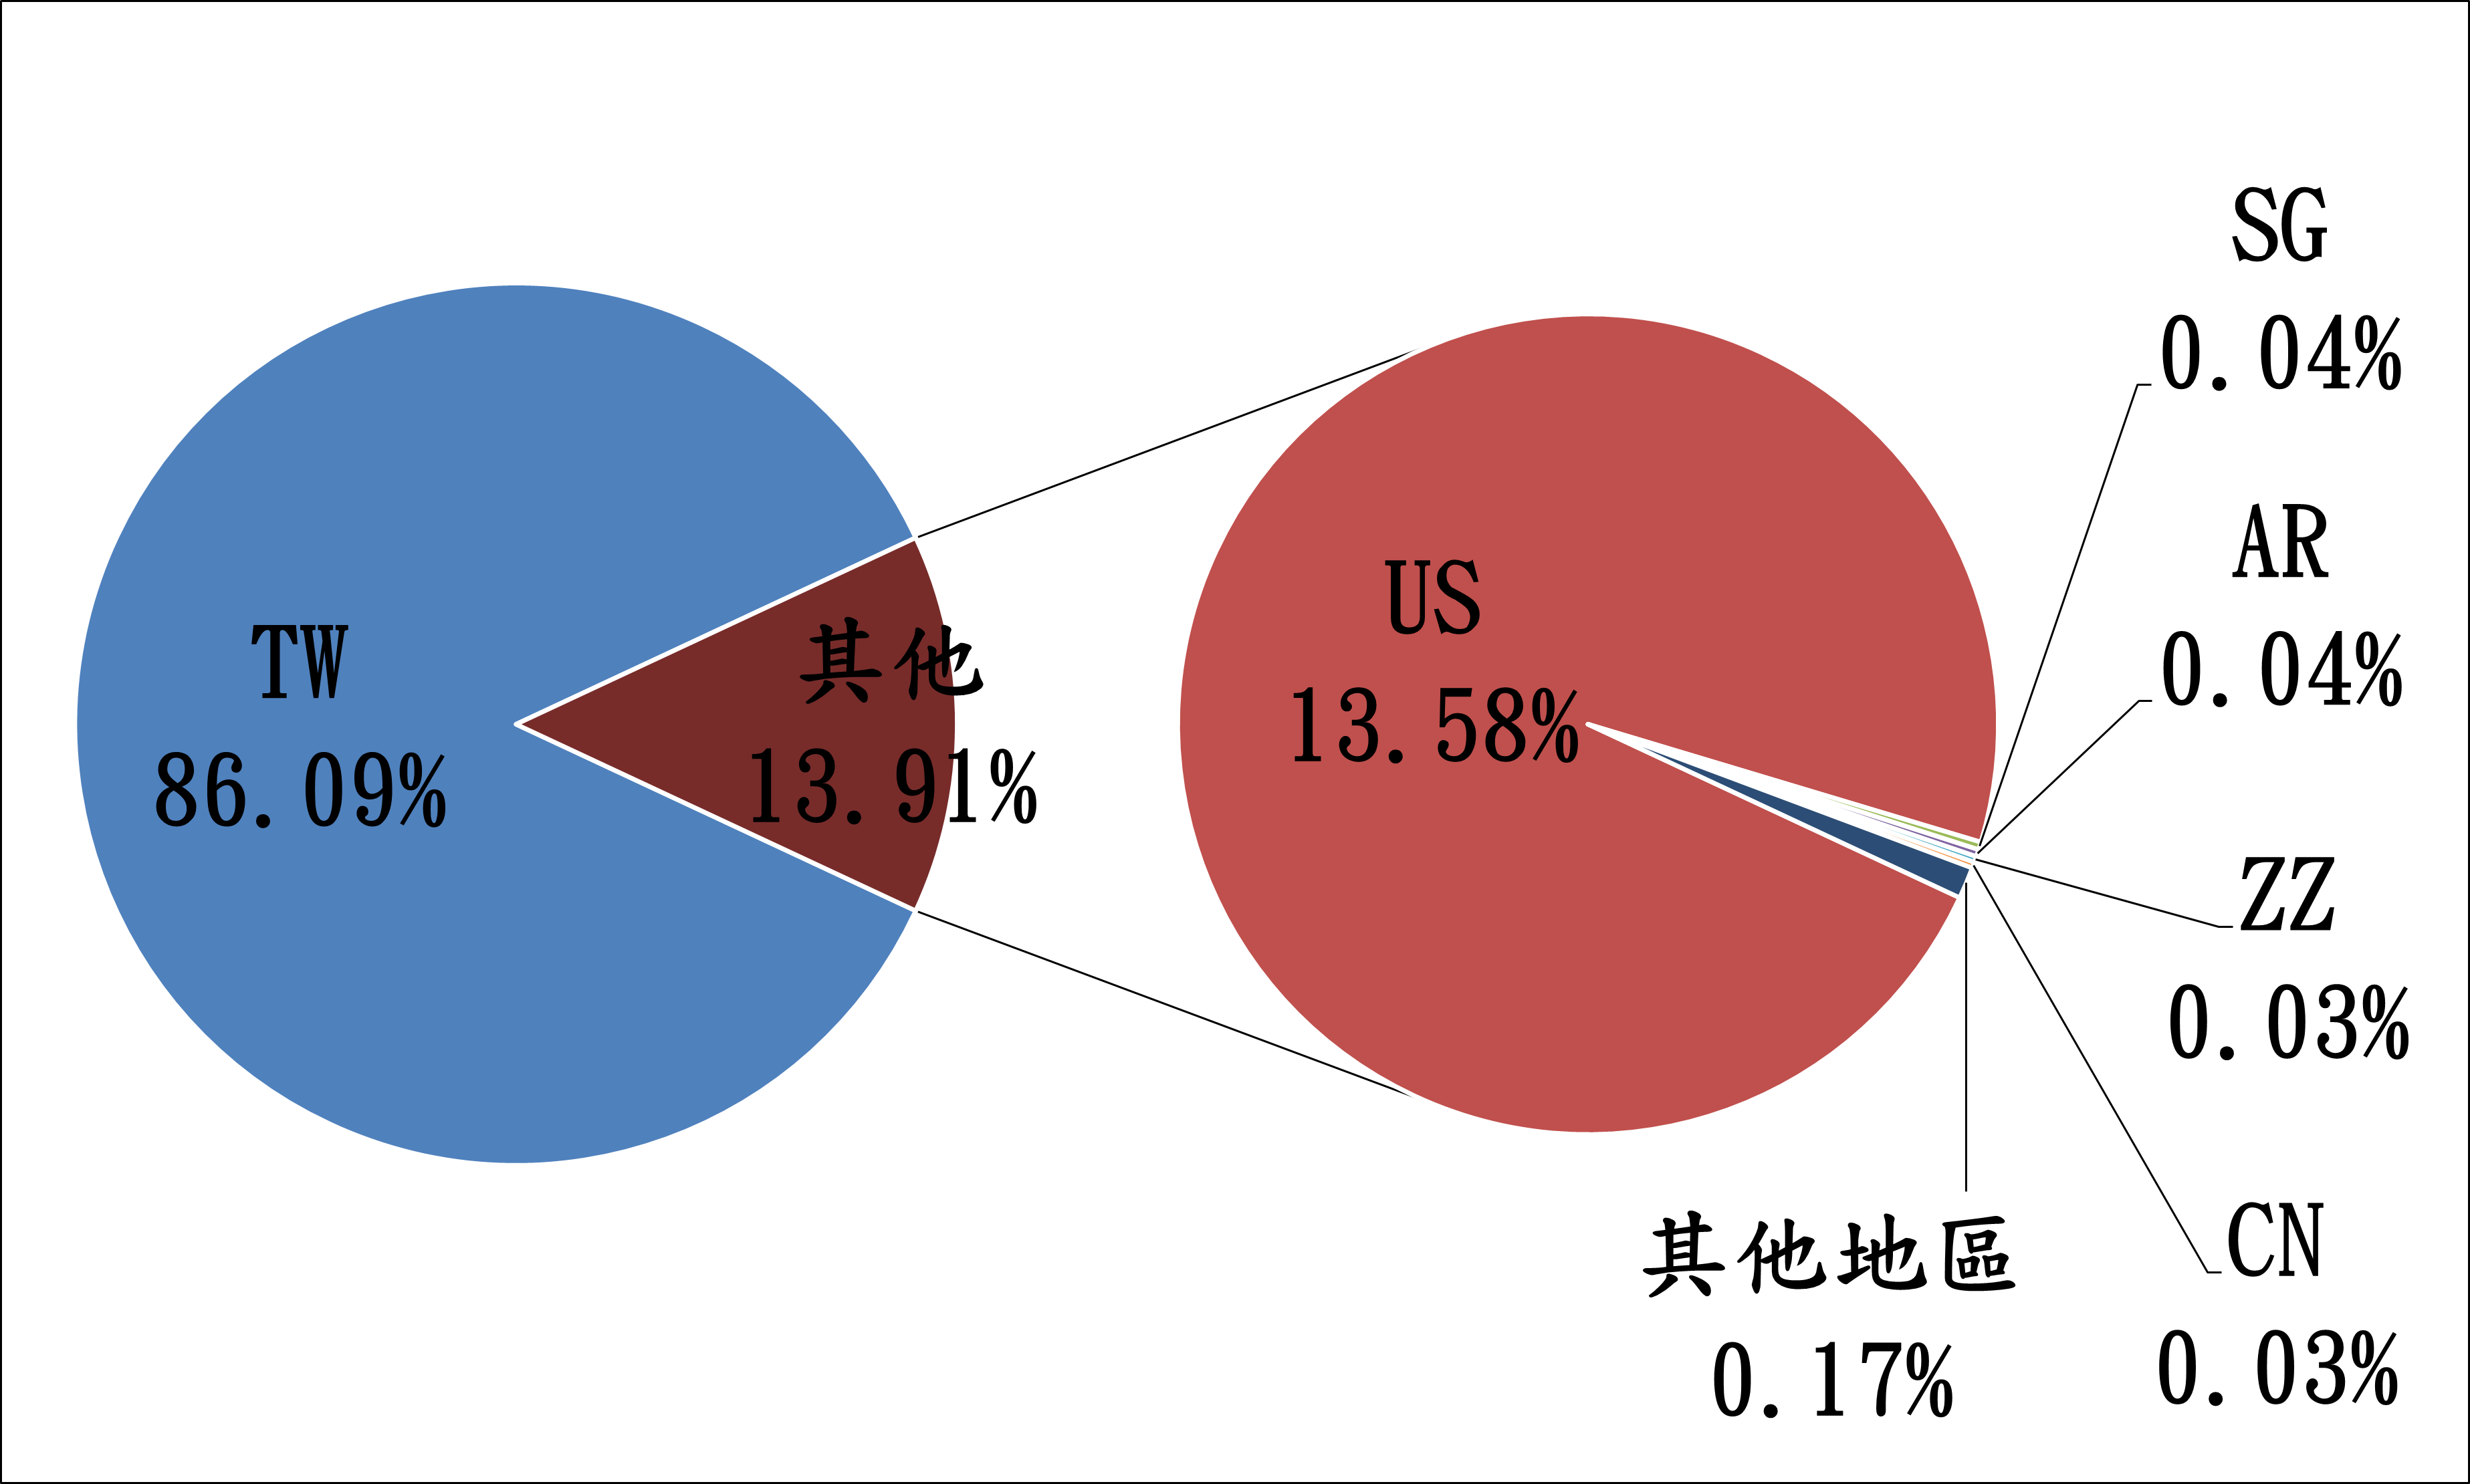 TW86.09% 其他13.91% US13.58% SG0.04% AR0.04% ZZ0.03% CN0.03% 其他地區0.17%